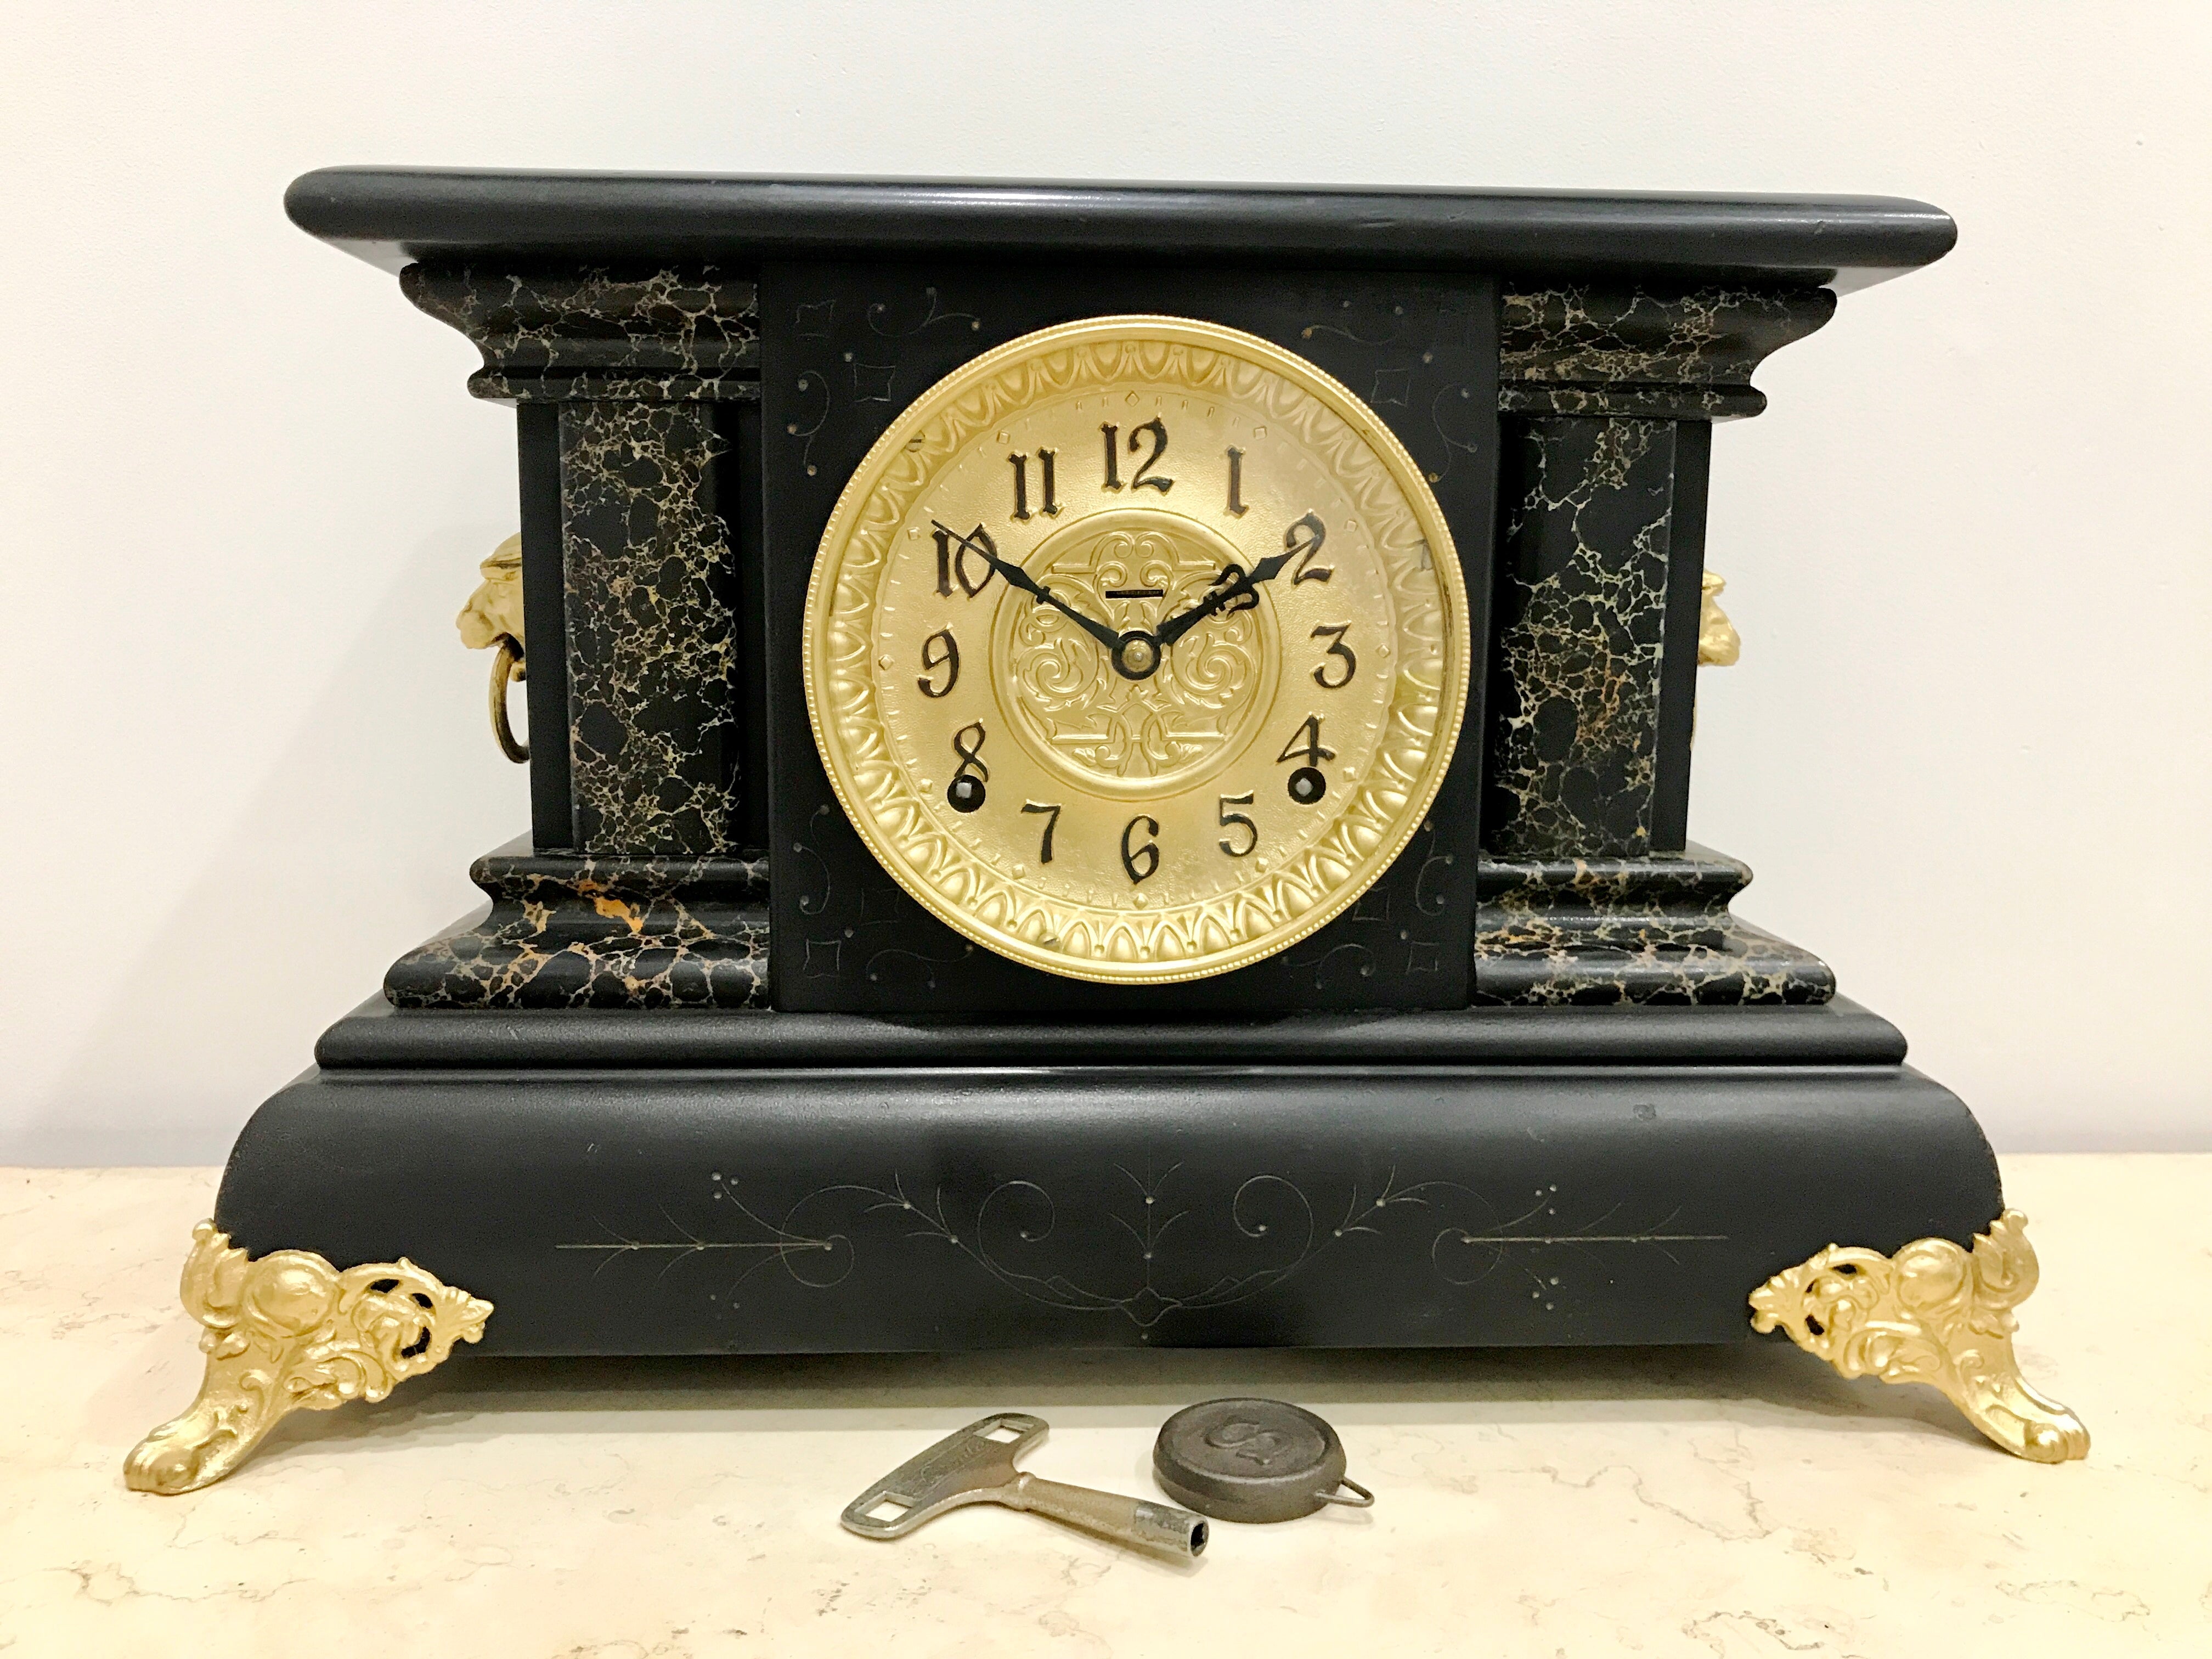 Original Antique Mantel Clock | eXibit collection